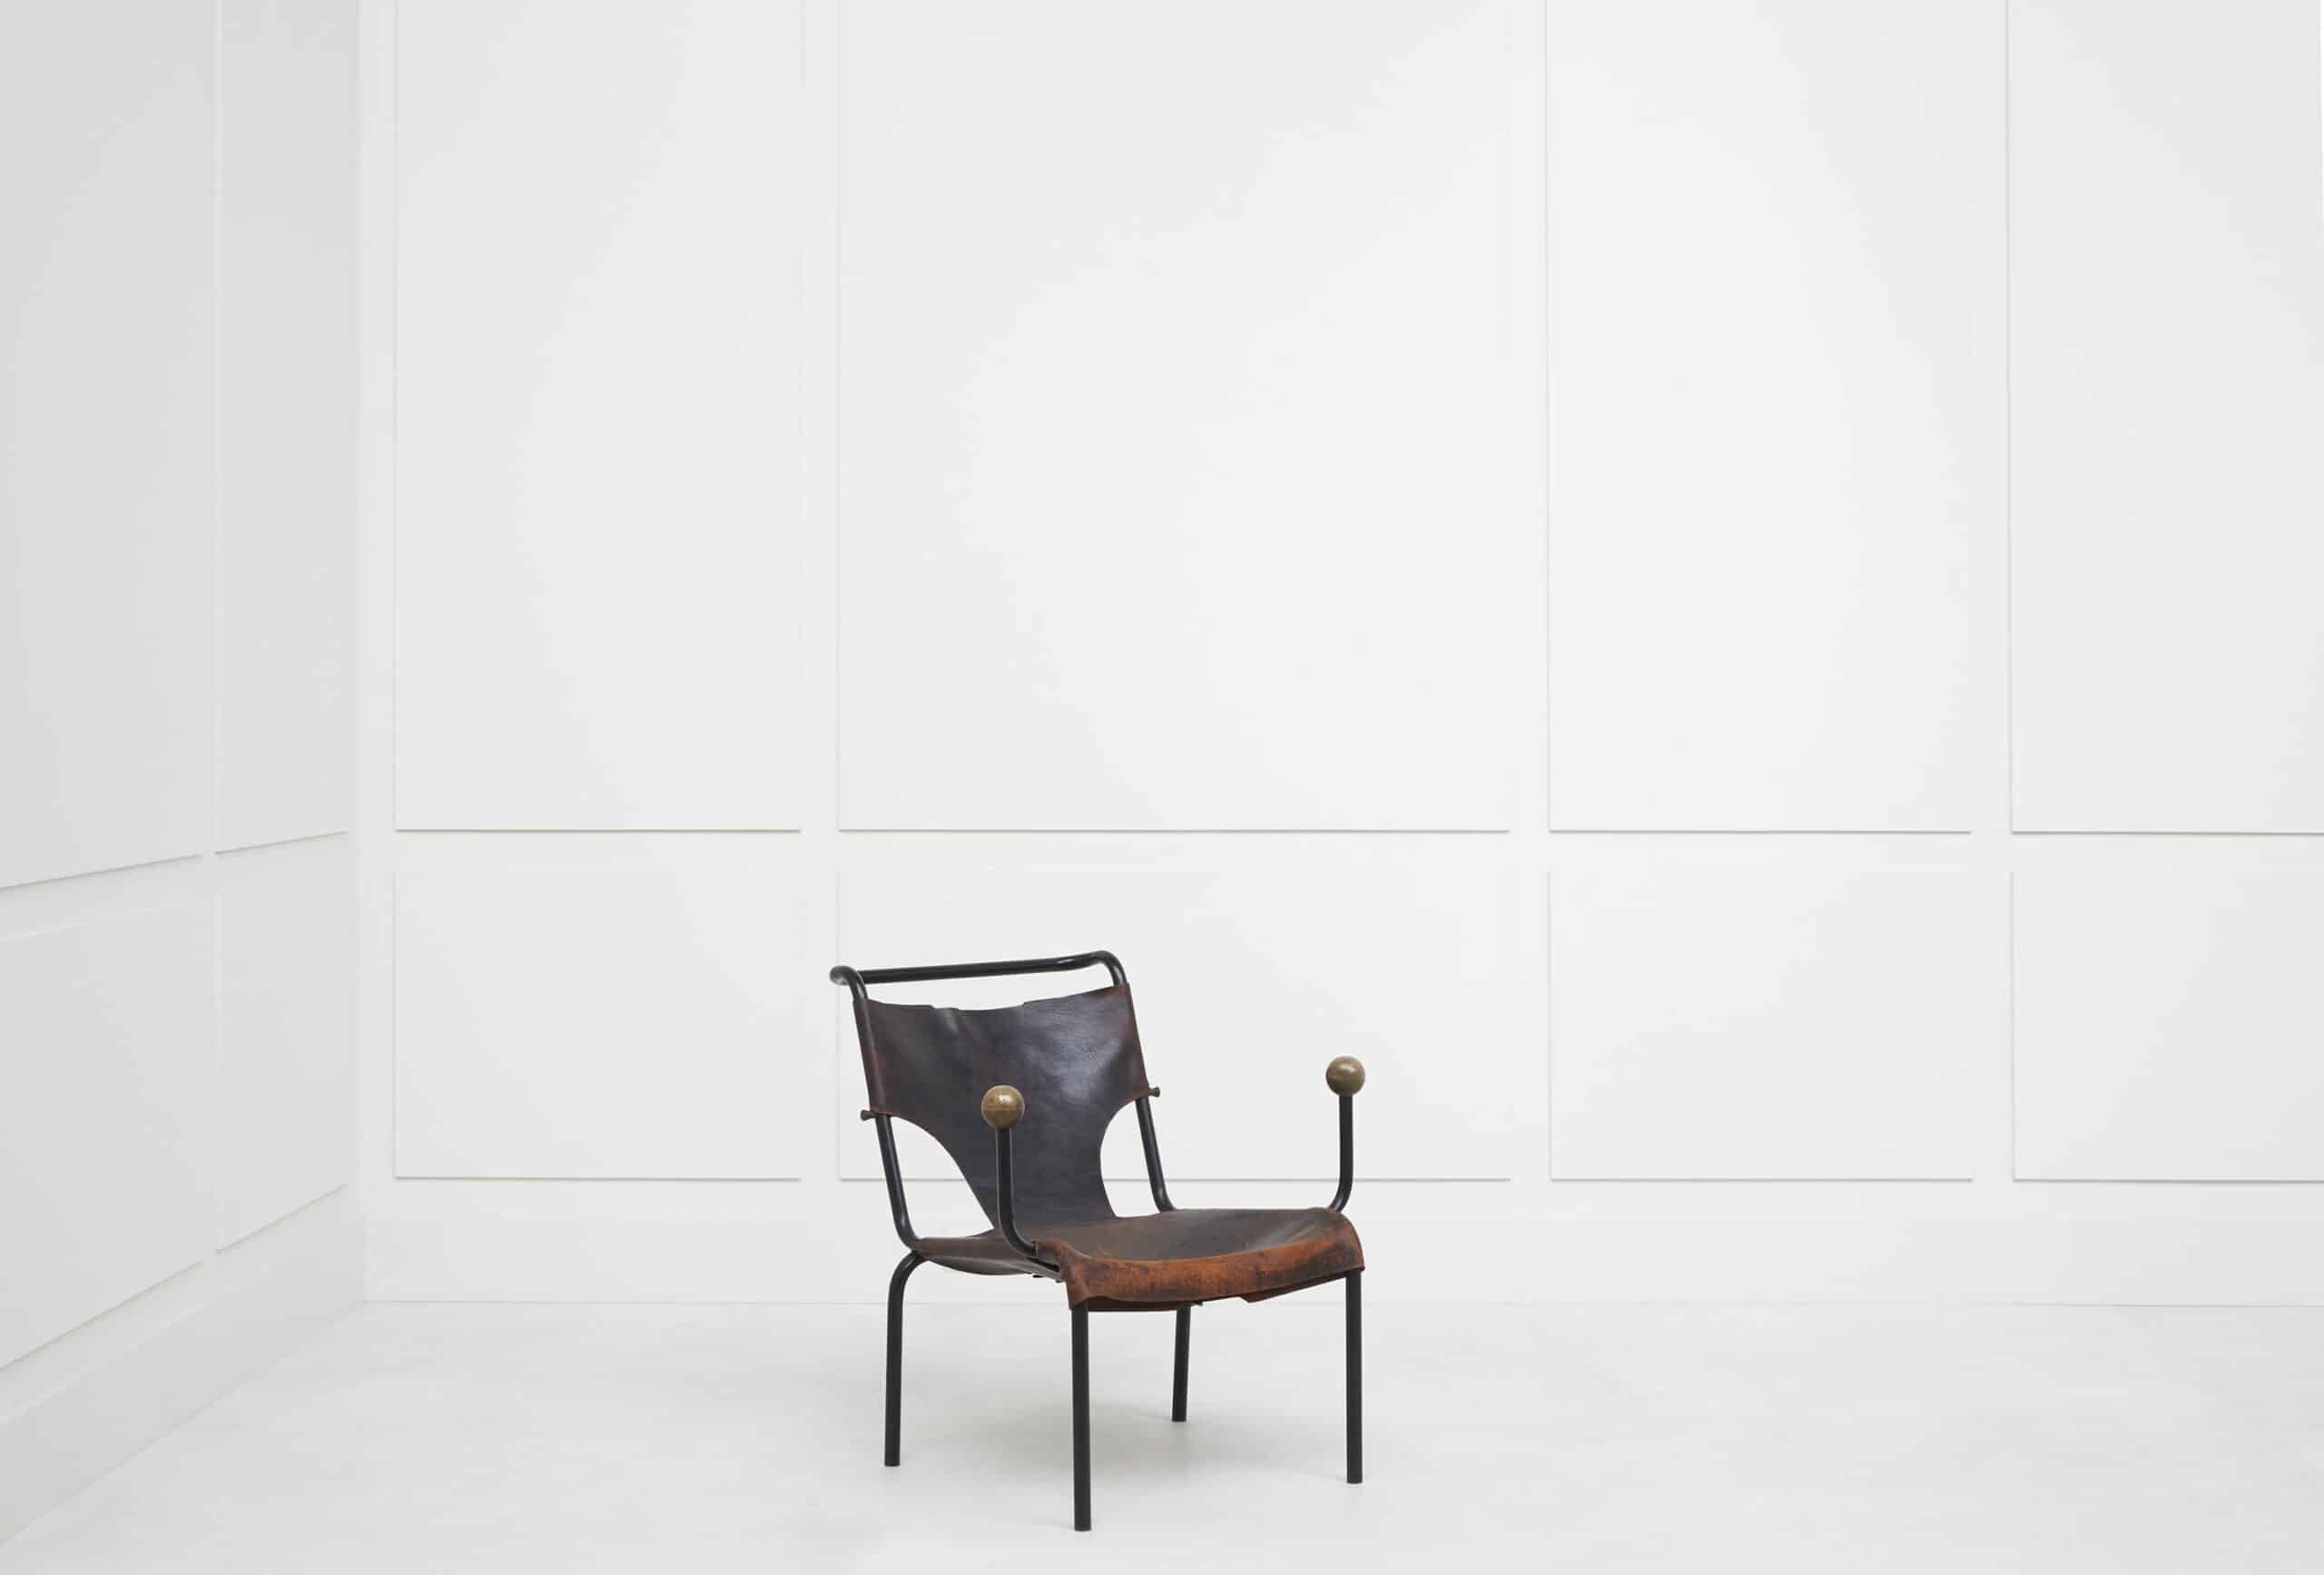 Lina Bo Bardi, Rare and original “Bola” chair, vue 02